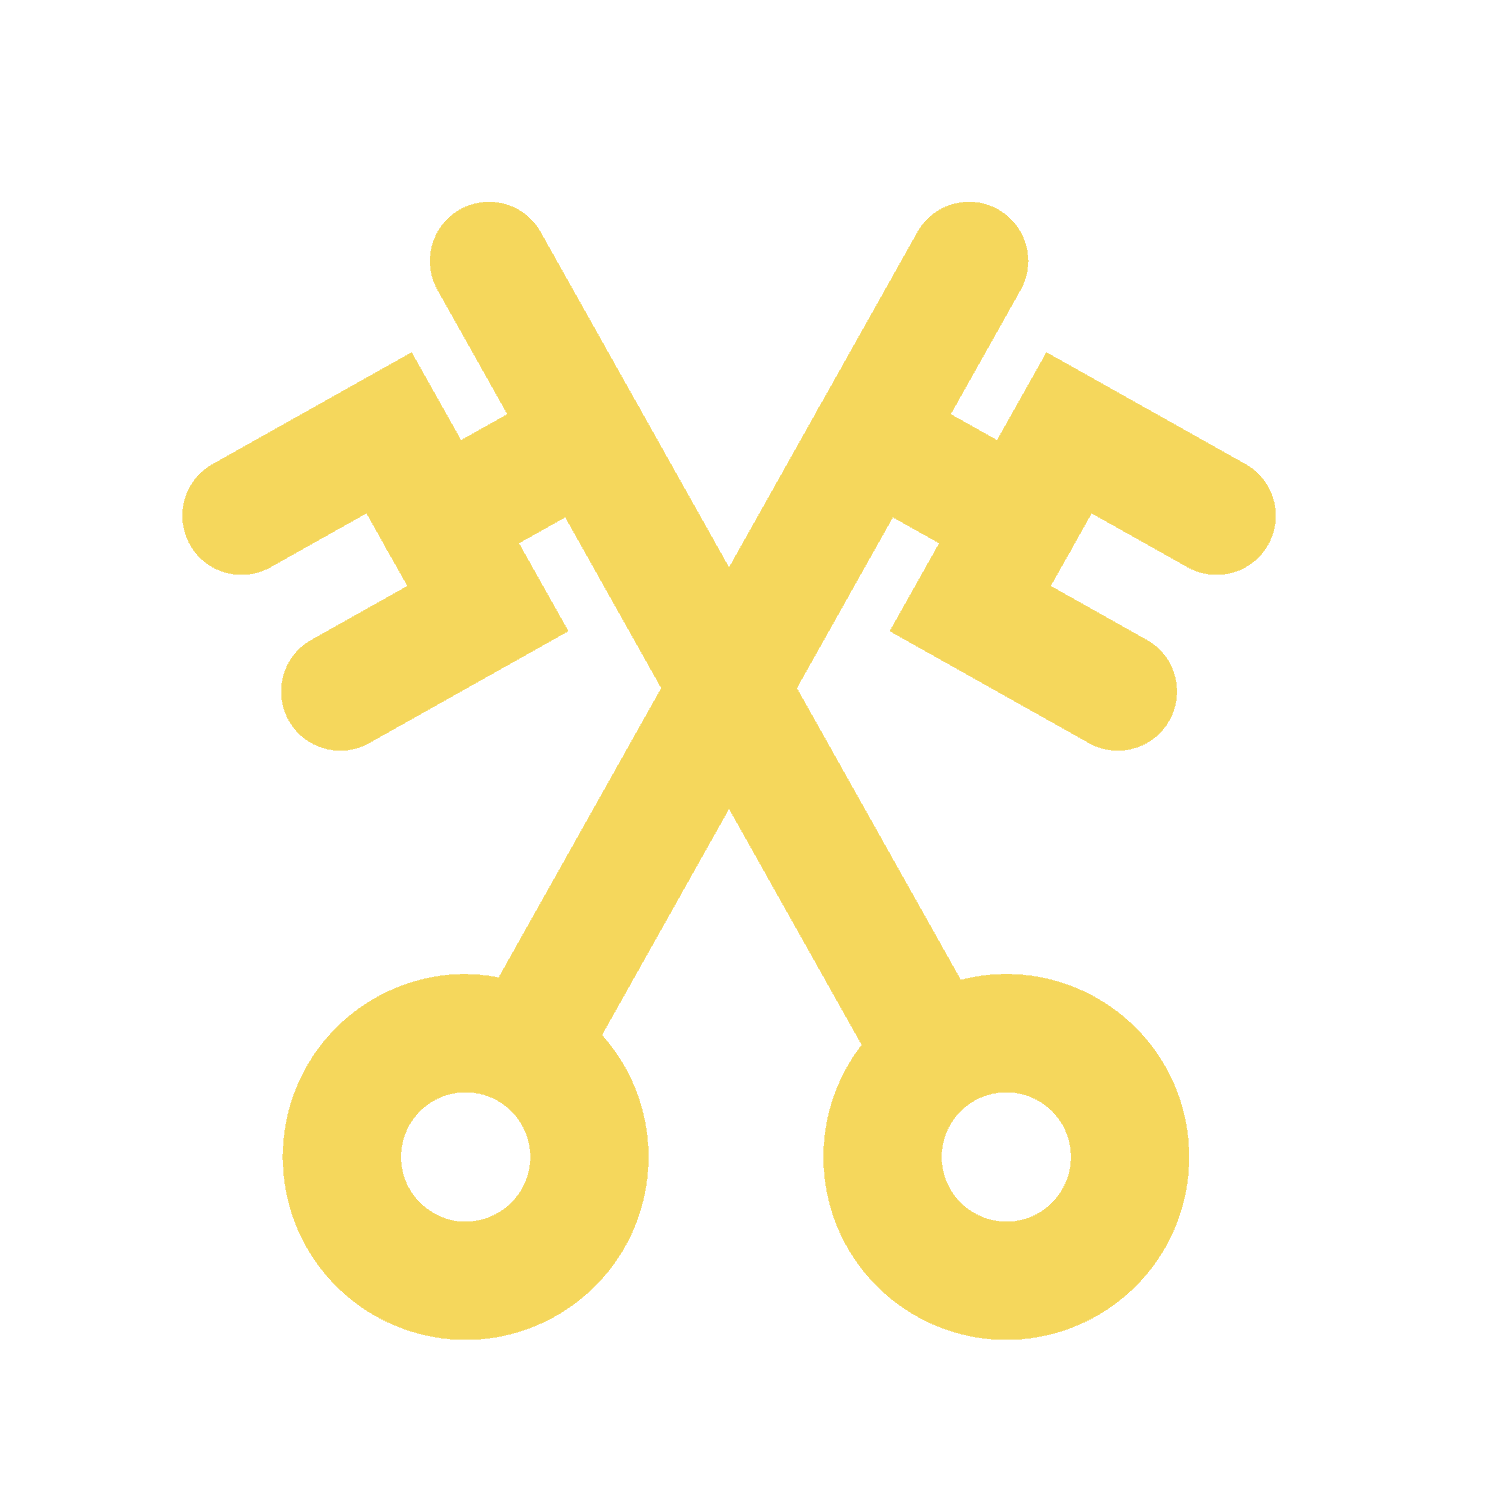 flat illustration of two crossed skeleton keys